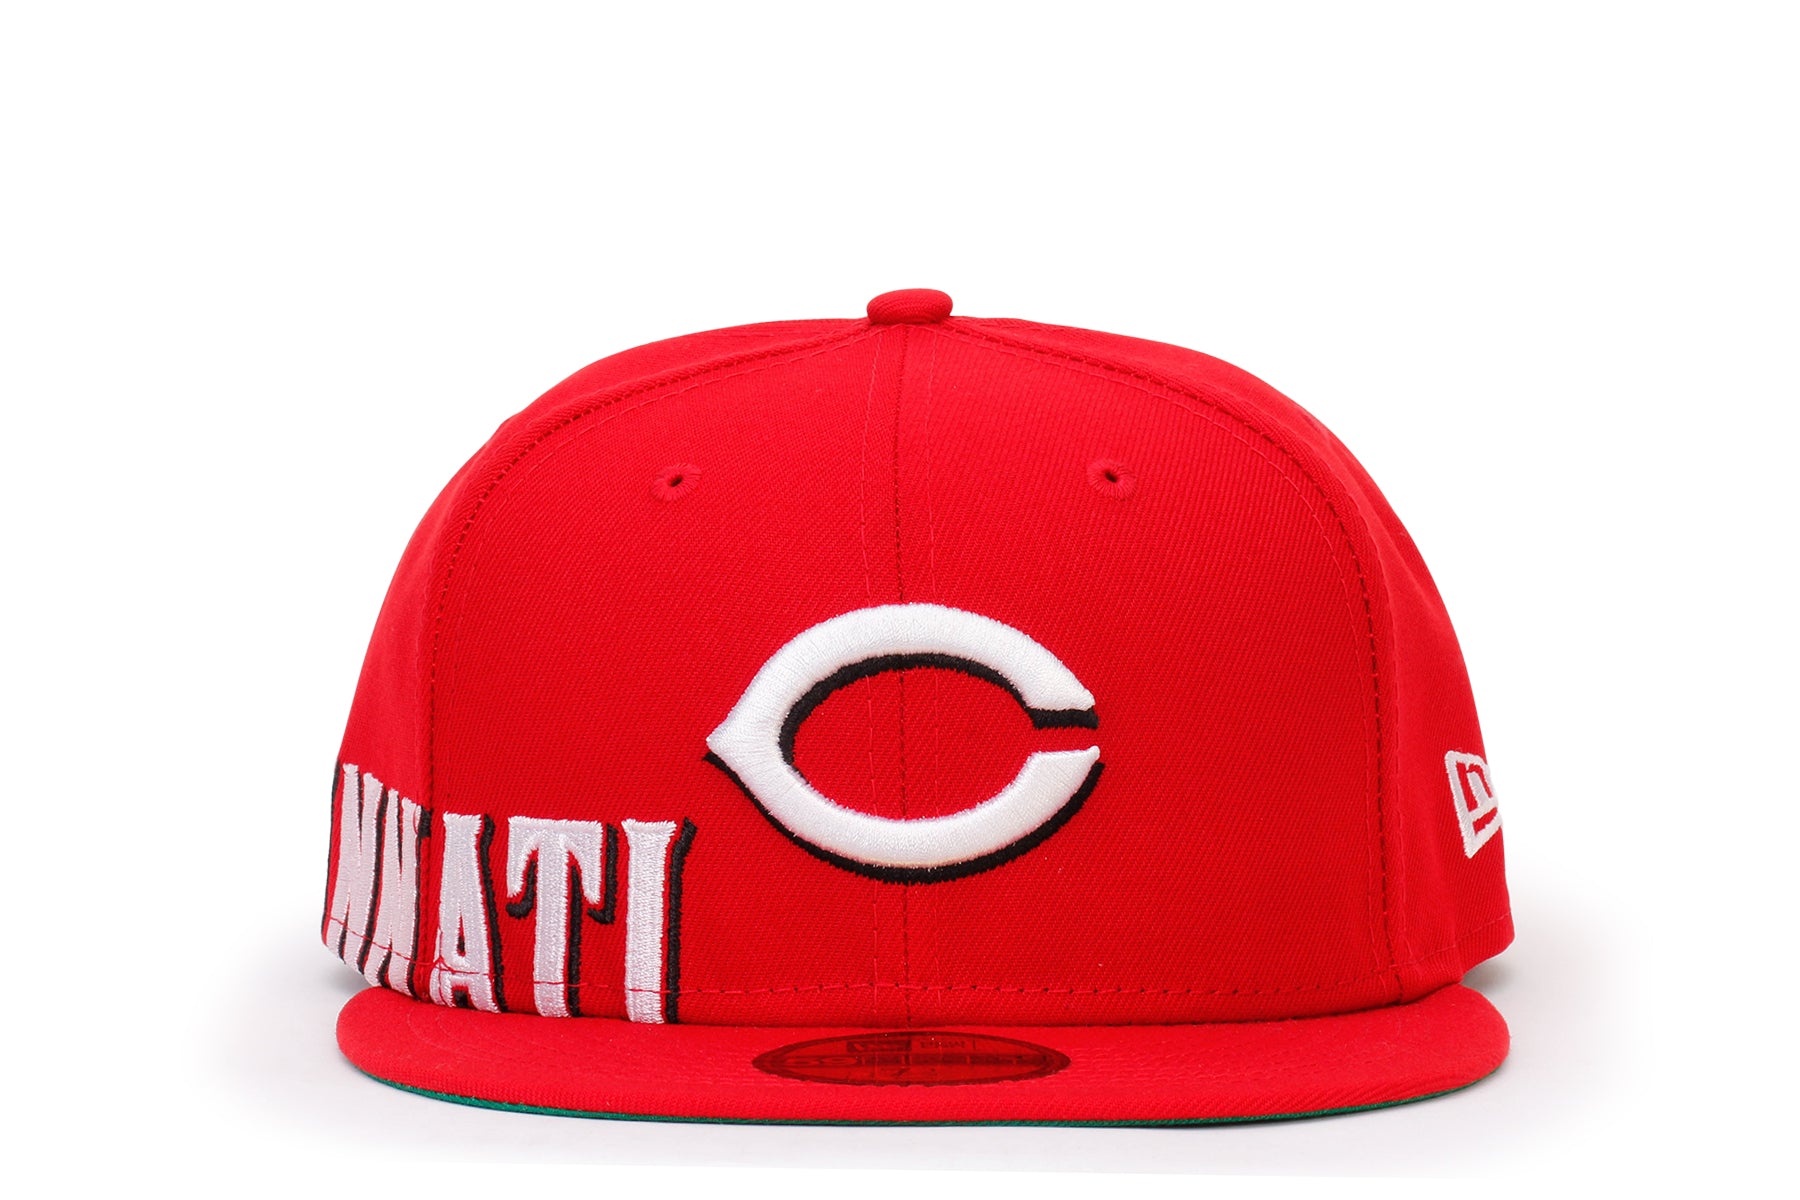 Cincinnati Reds New Era Fits, Fitted Size 7 Baseball Hat Cap, Navy Blue -  U.S.A.